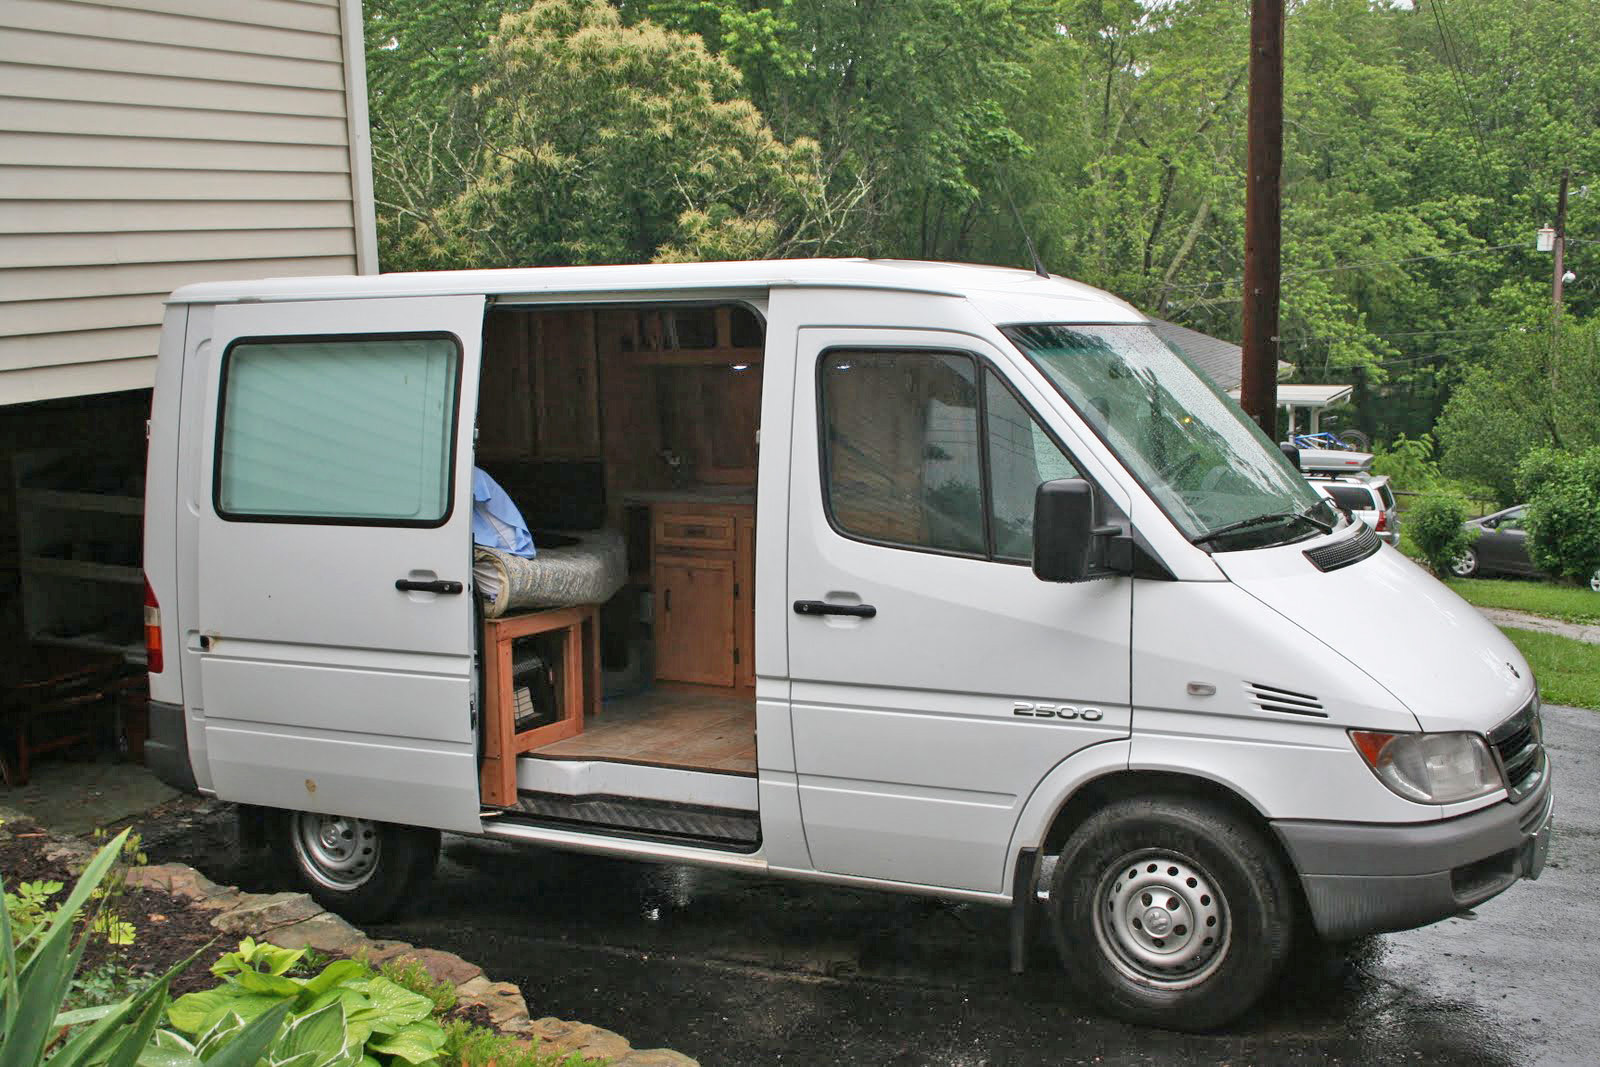 Best ideas about DIY Camper Van
. Save or Pin Sprinter RV Max 2 0 DIY Sprinter Camper Van Now.